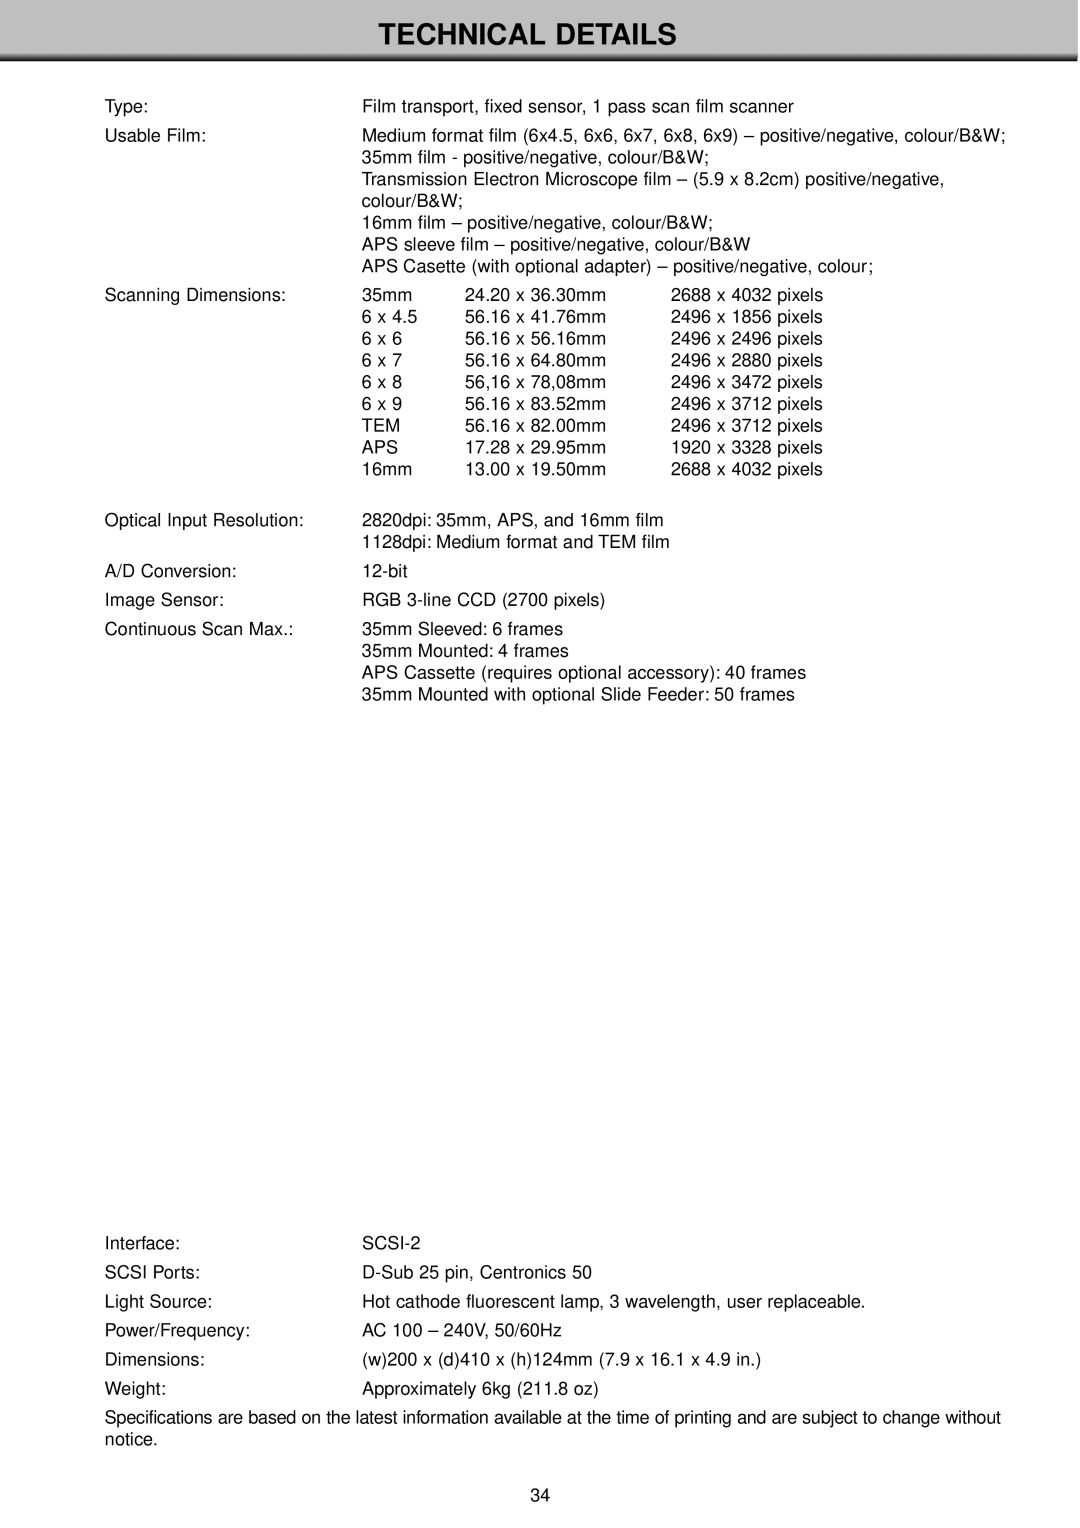 Konica Minolta II manual Technical Details 